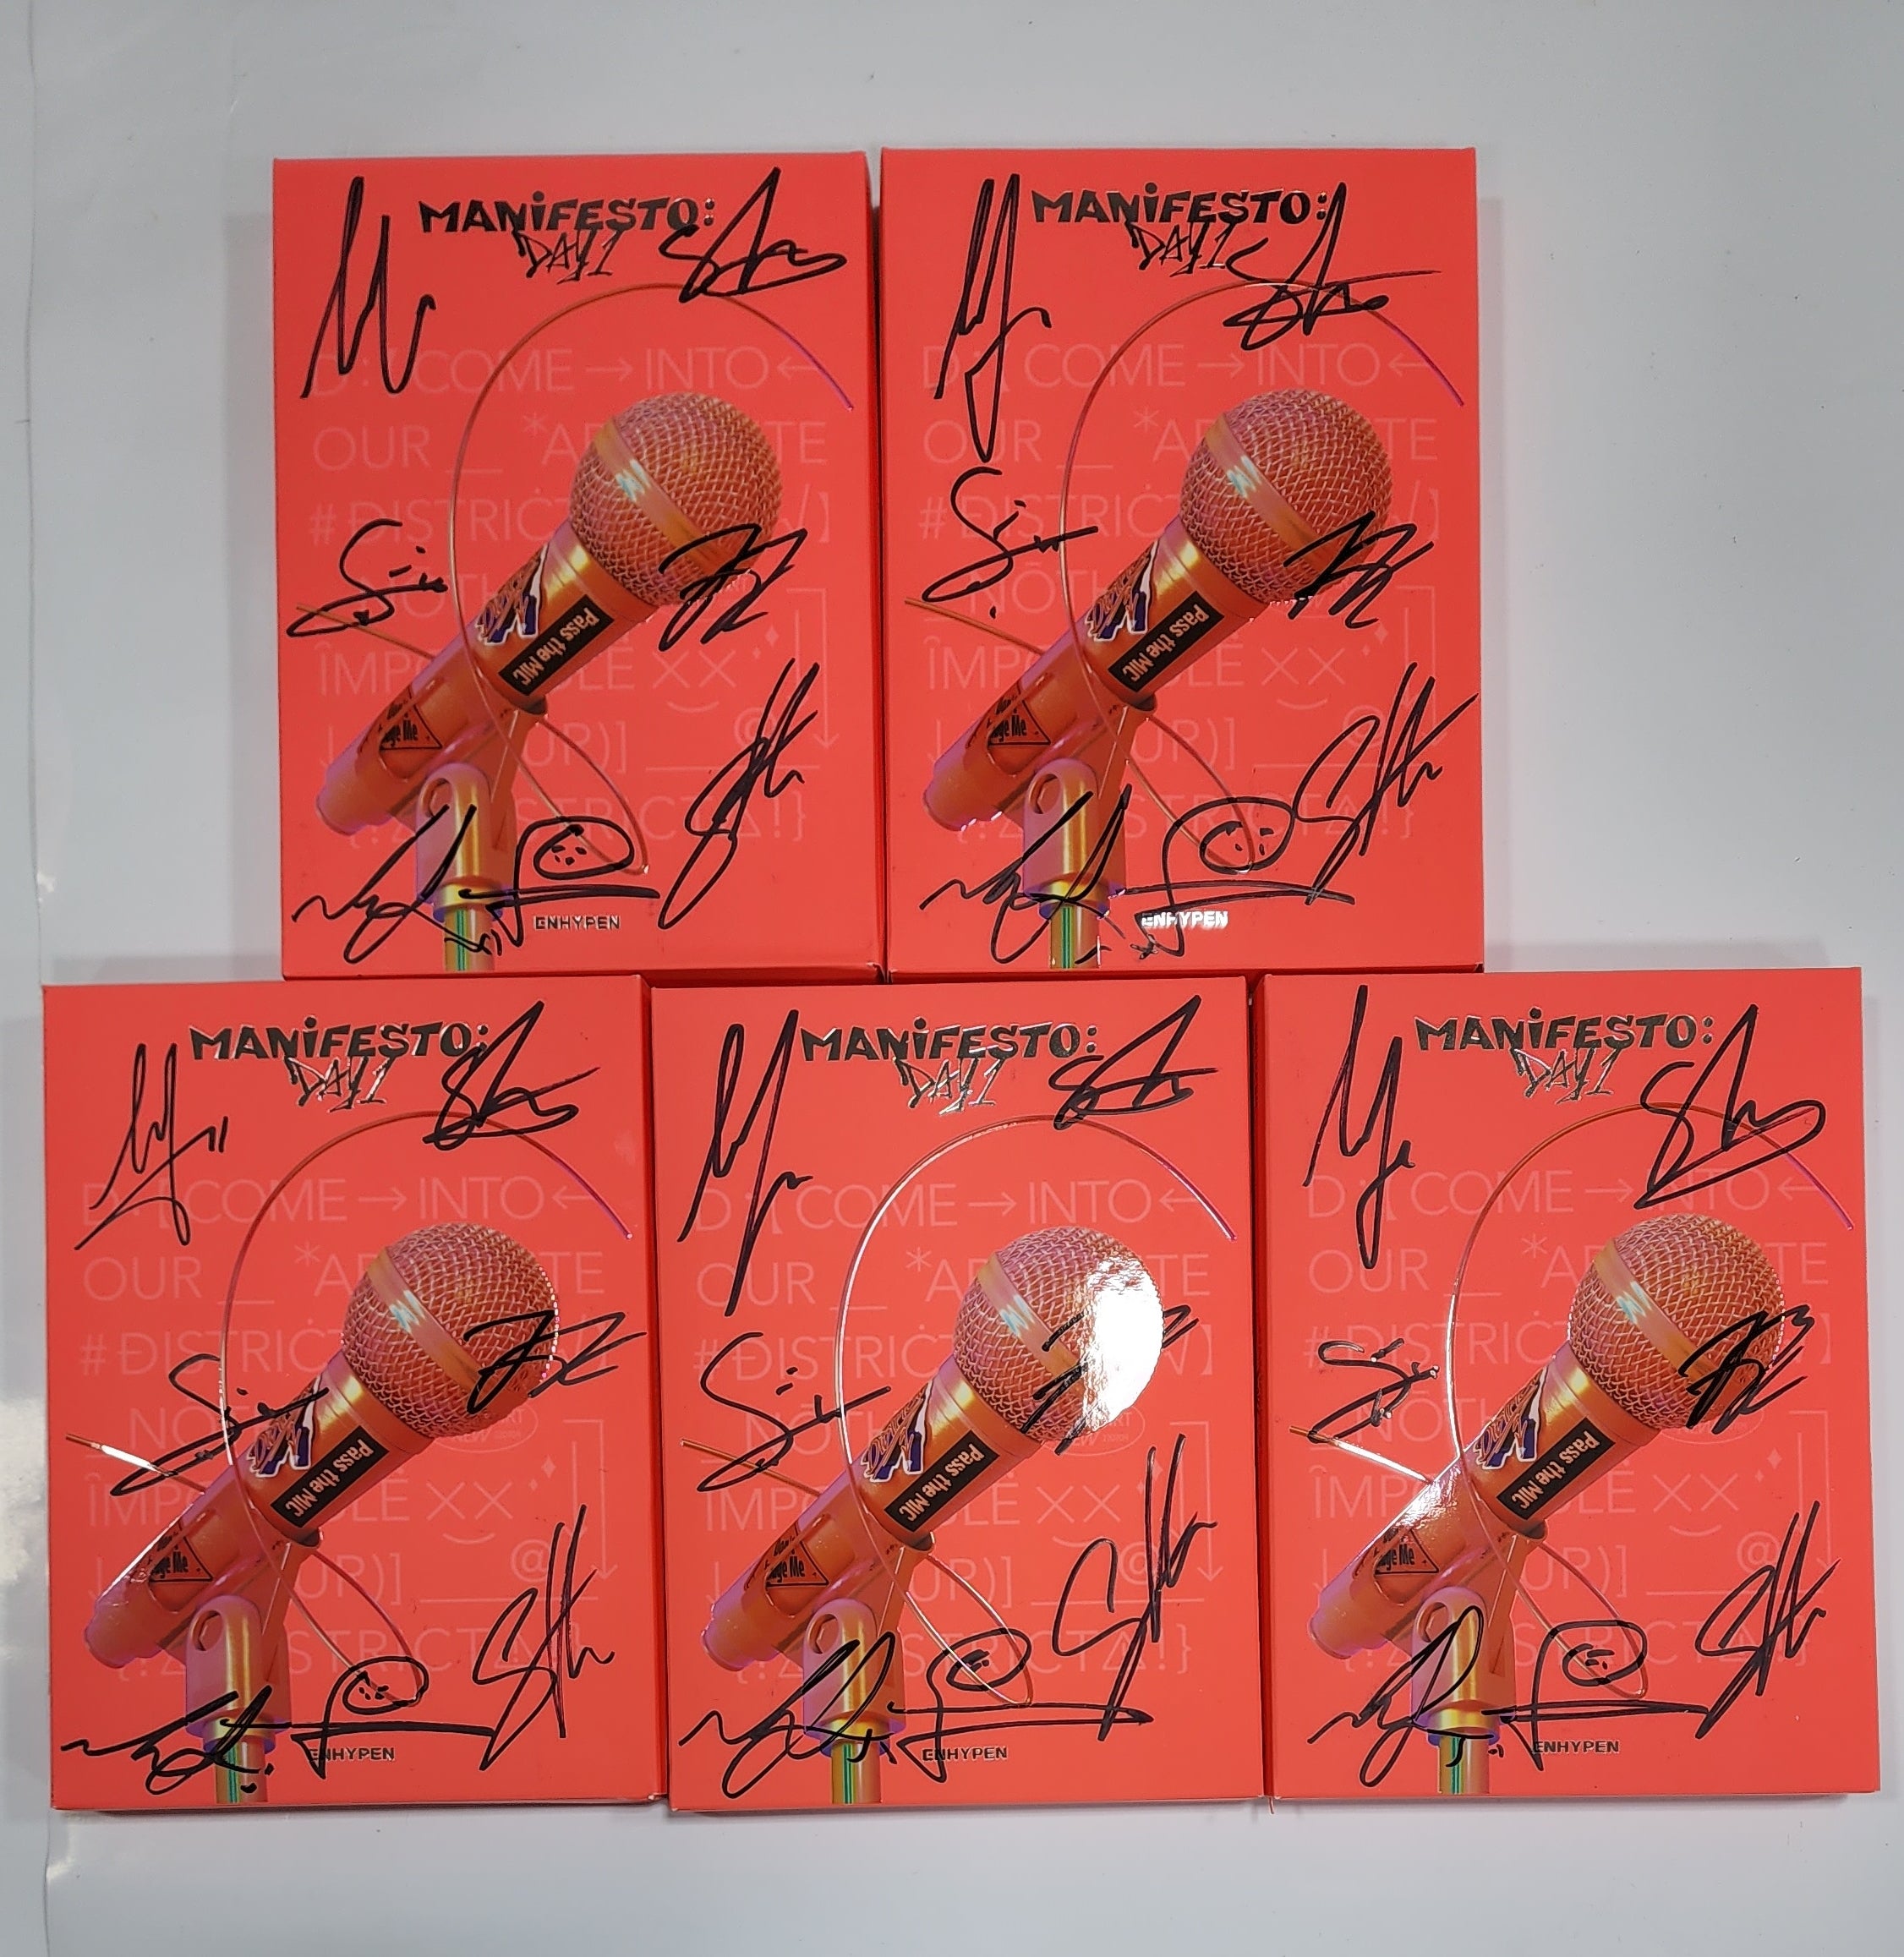 ENHYPEN “MANIFESTO : DAY 1” - Hand Autographed(Signed) Promo Album